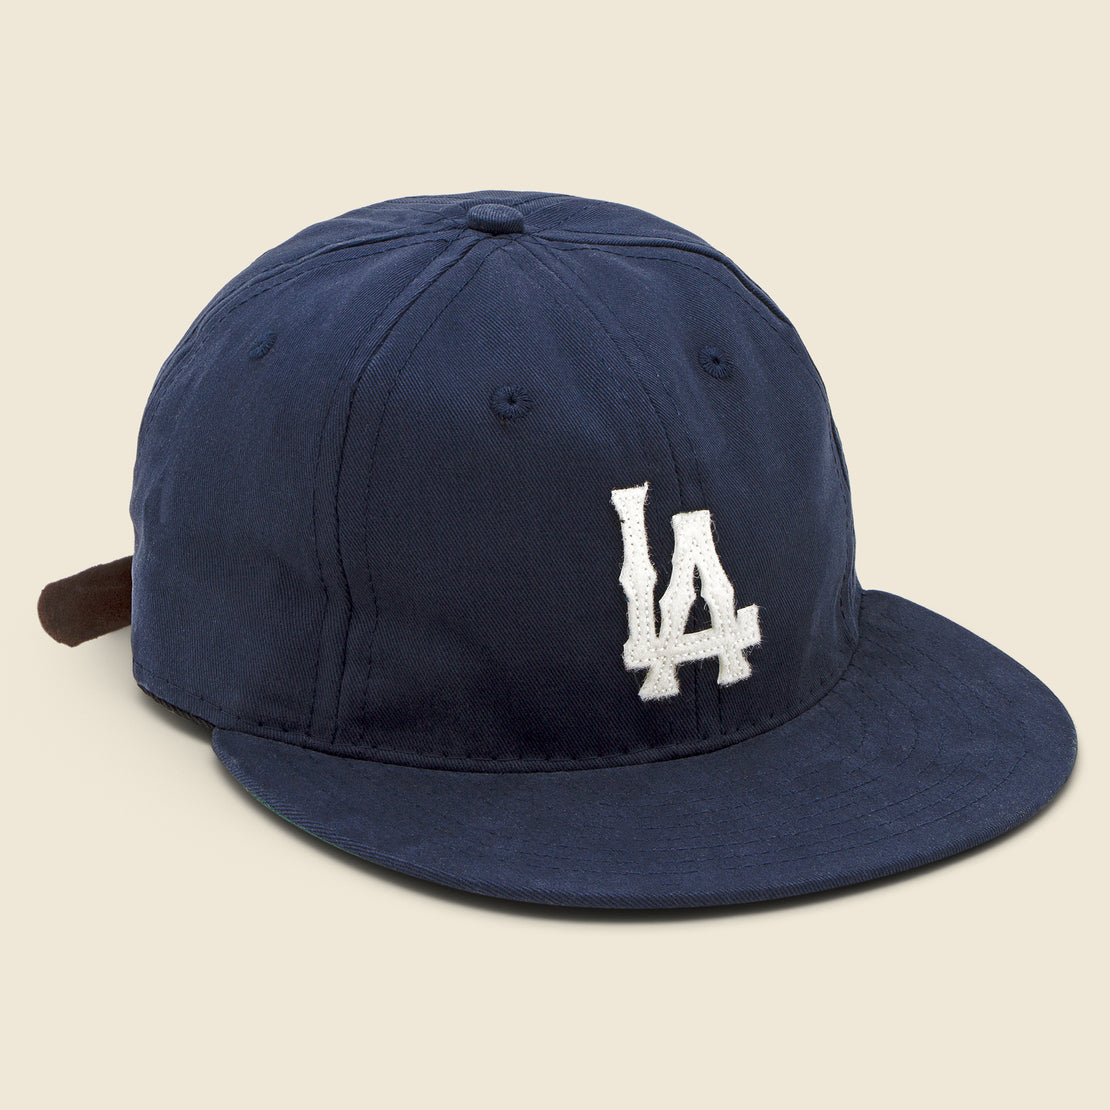 Cotton Hat Los Navy Angeles -